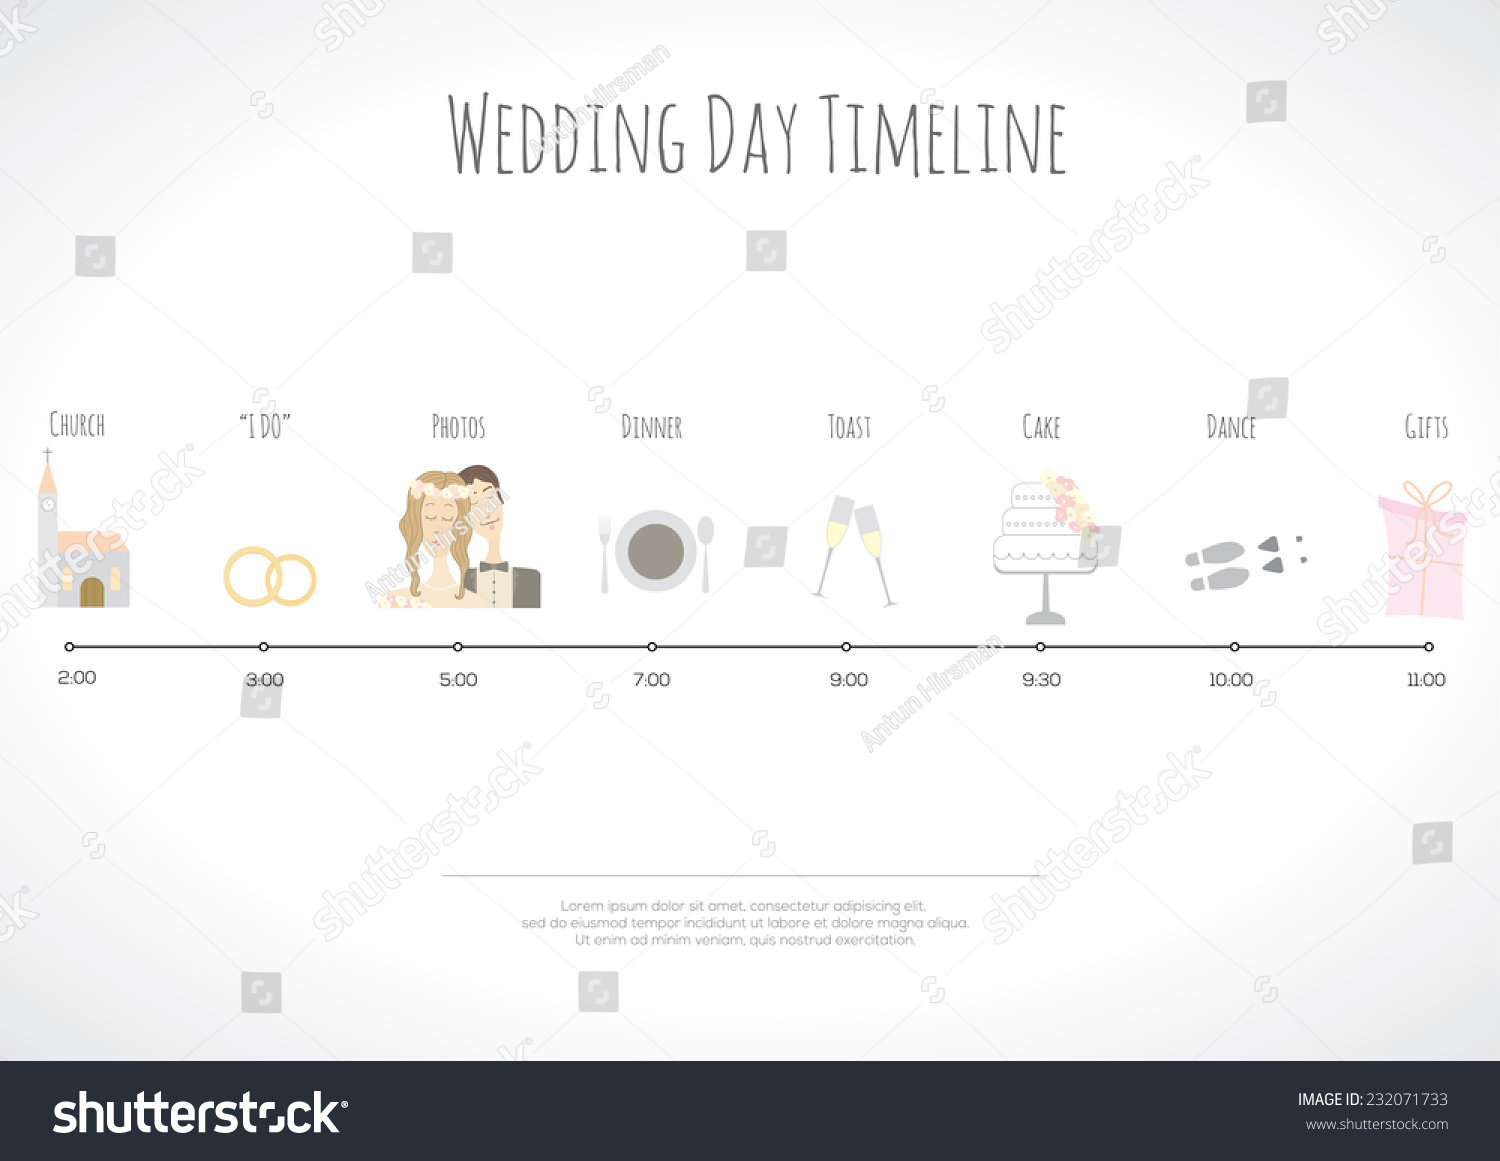 clipart wedding timeline free - photo #14